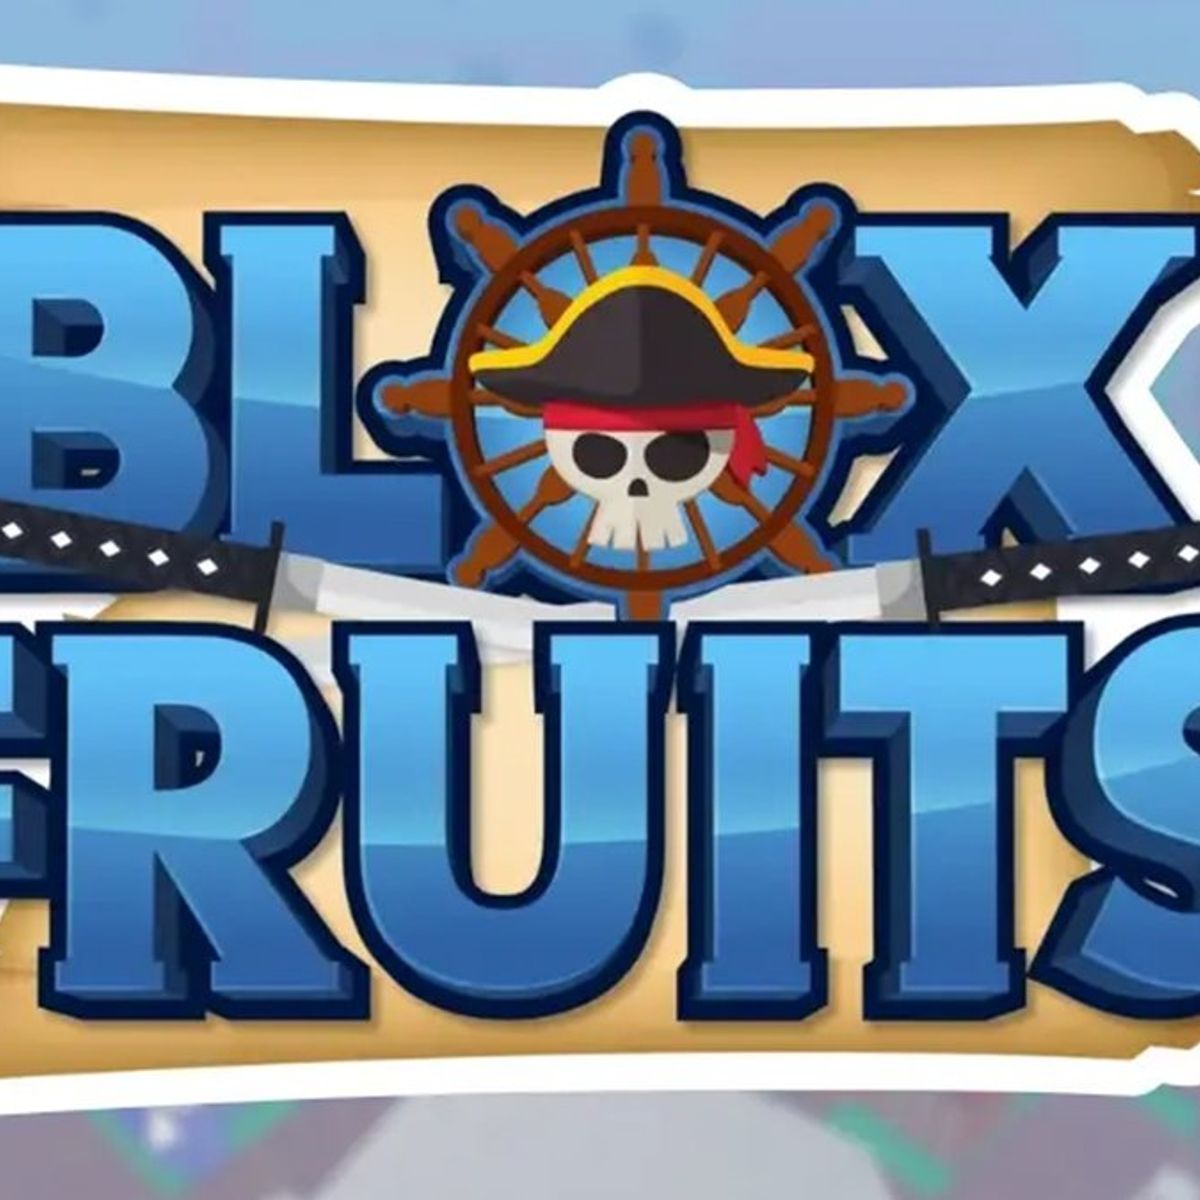 Blox Fruits, Jogo de Videogame Roblox Nunca Usado 87194484